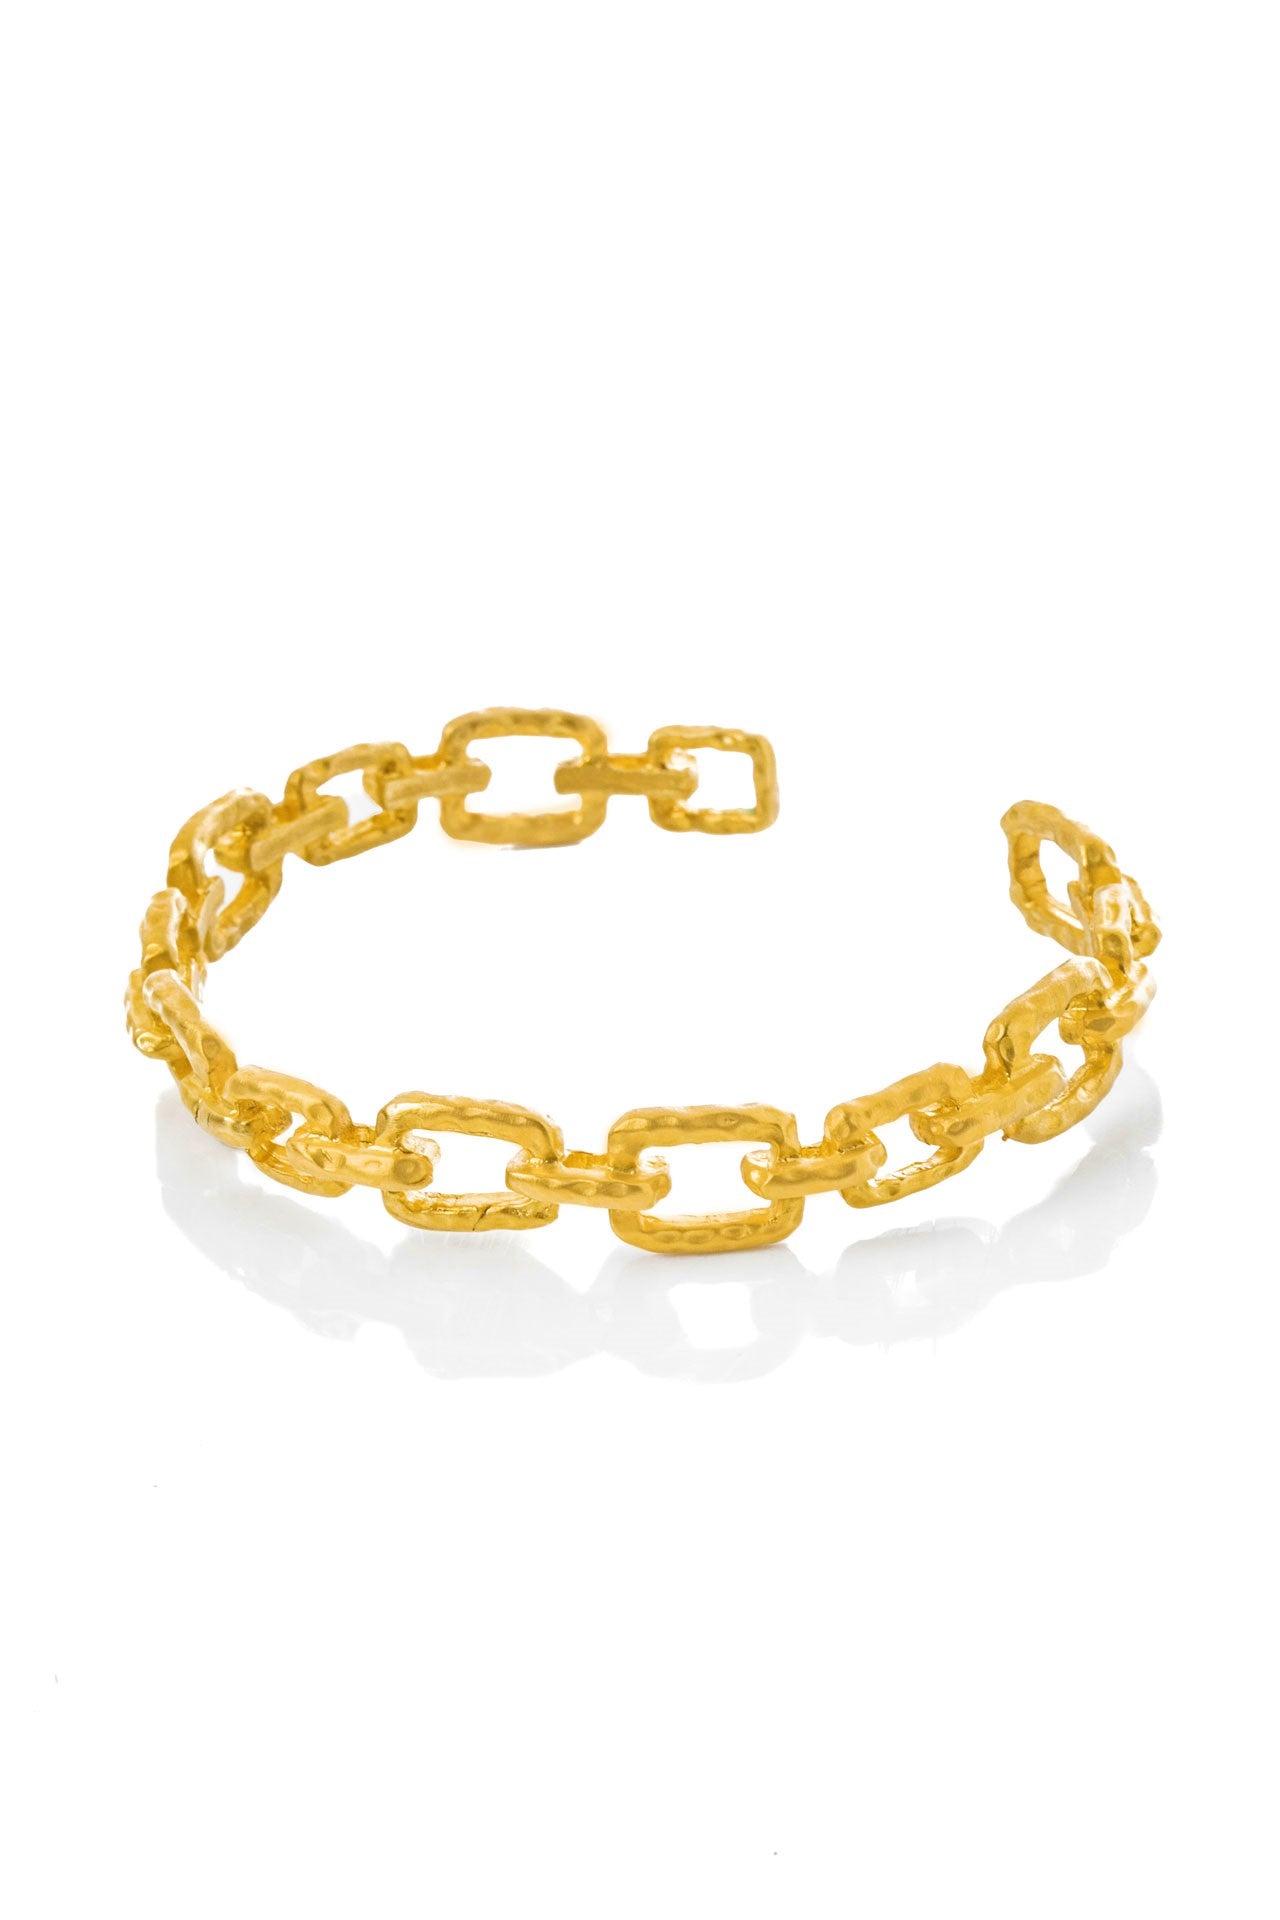 Linda chain bracelet brass  by Pearl Martini